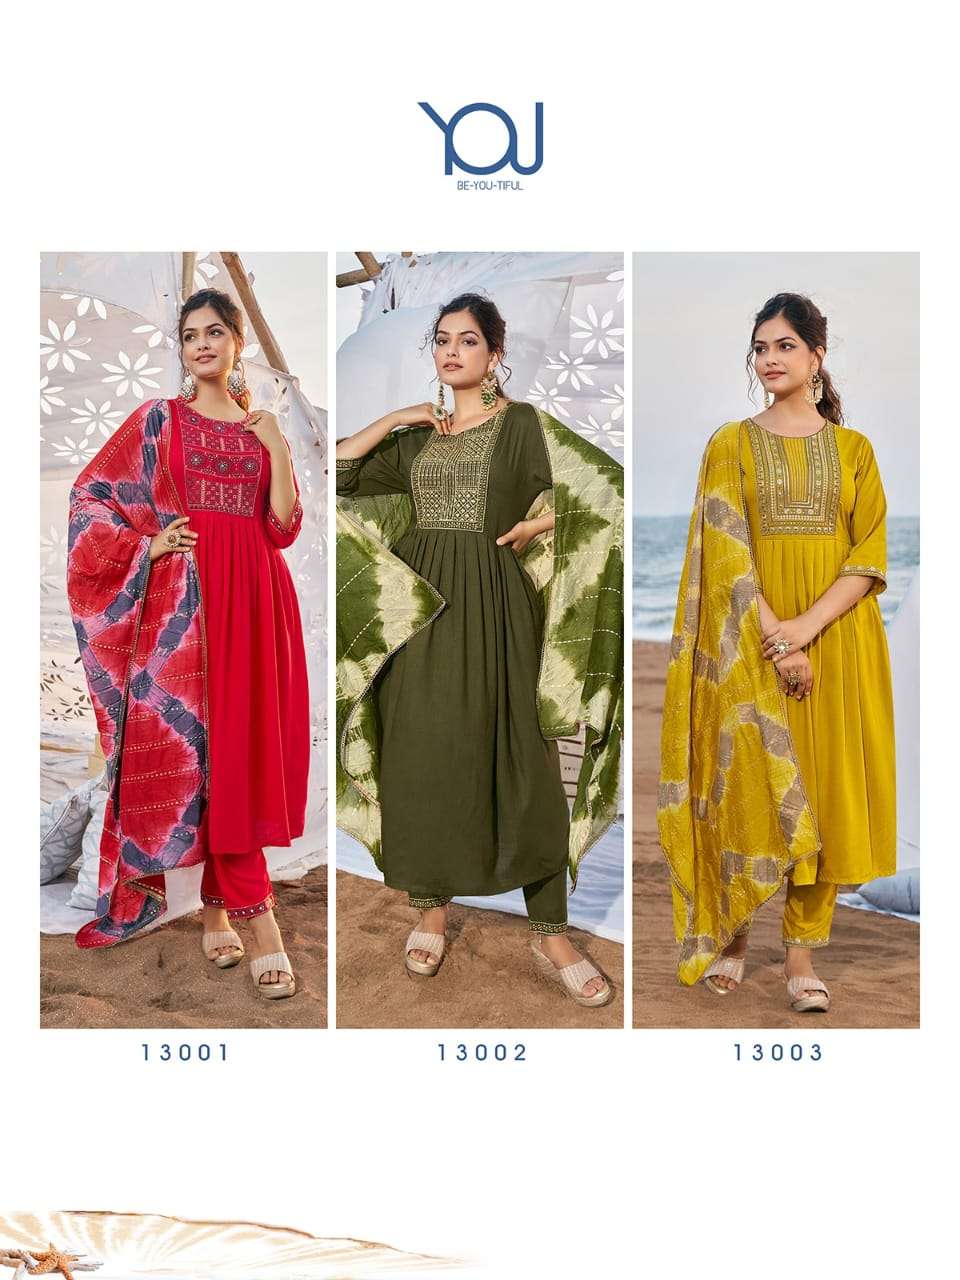 wanna by kashvi naira vol 2 13001-13006 series designer reyon ready made salwar kameez wholesale dealer best price 